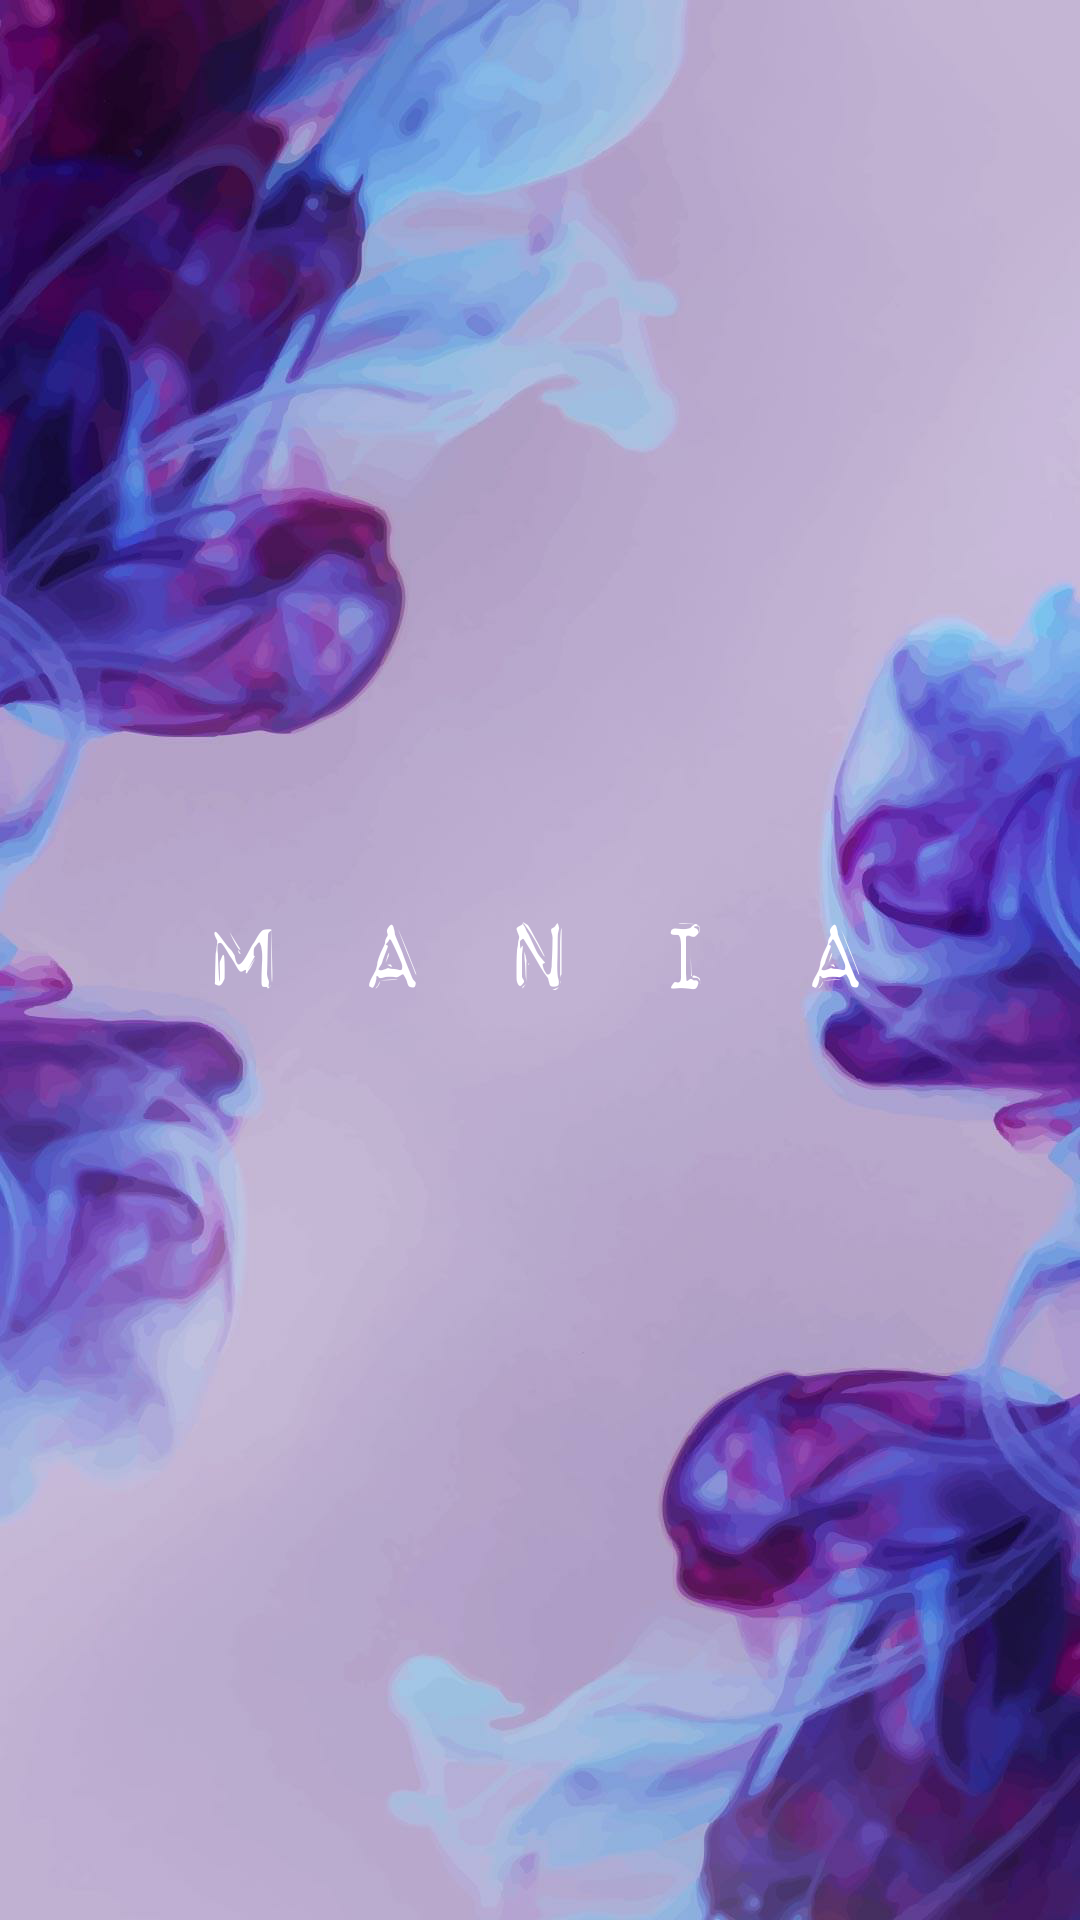 Mania Fall Out Boy - HD Wallpaper 